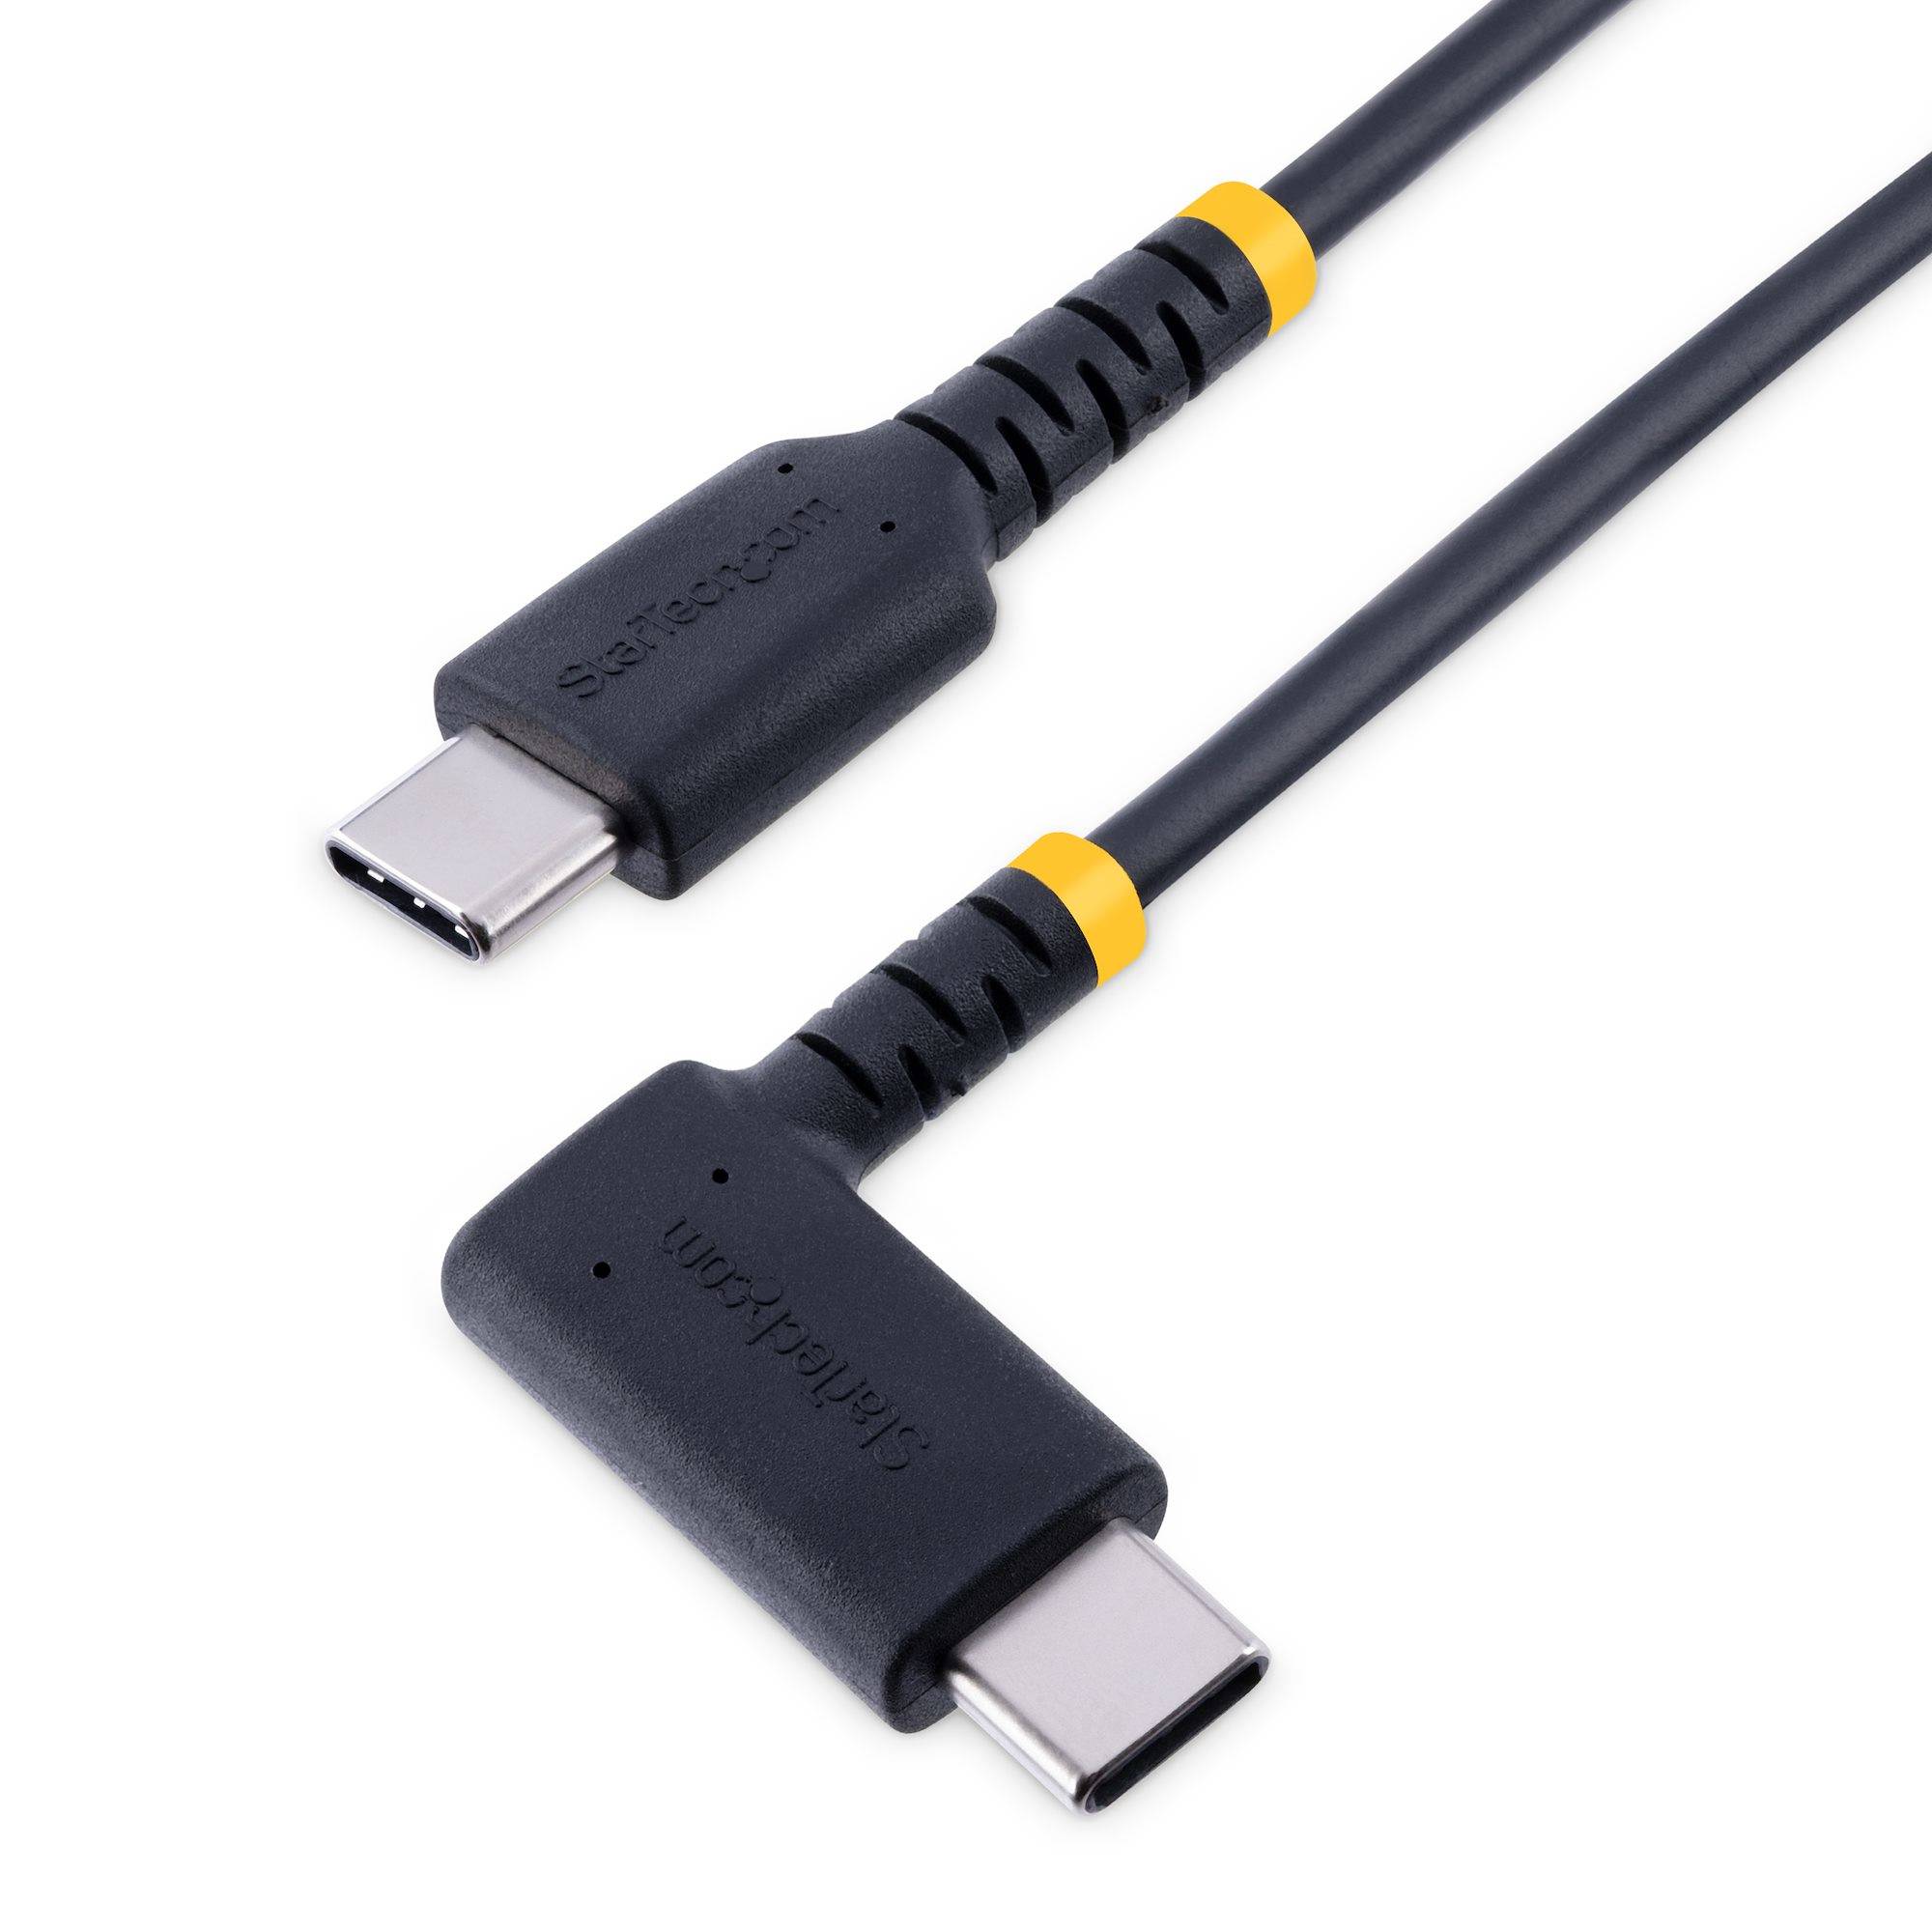 Rca Informatique - Image du produit : 15CM USB-C CHARGING CABLE FAST CHARGE - RIGHT ANGLE USBC CABLE